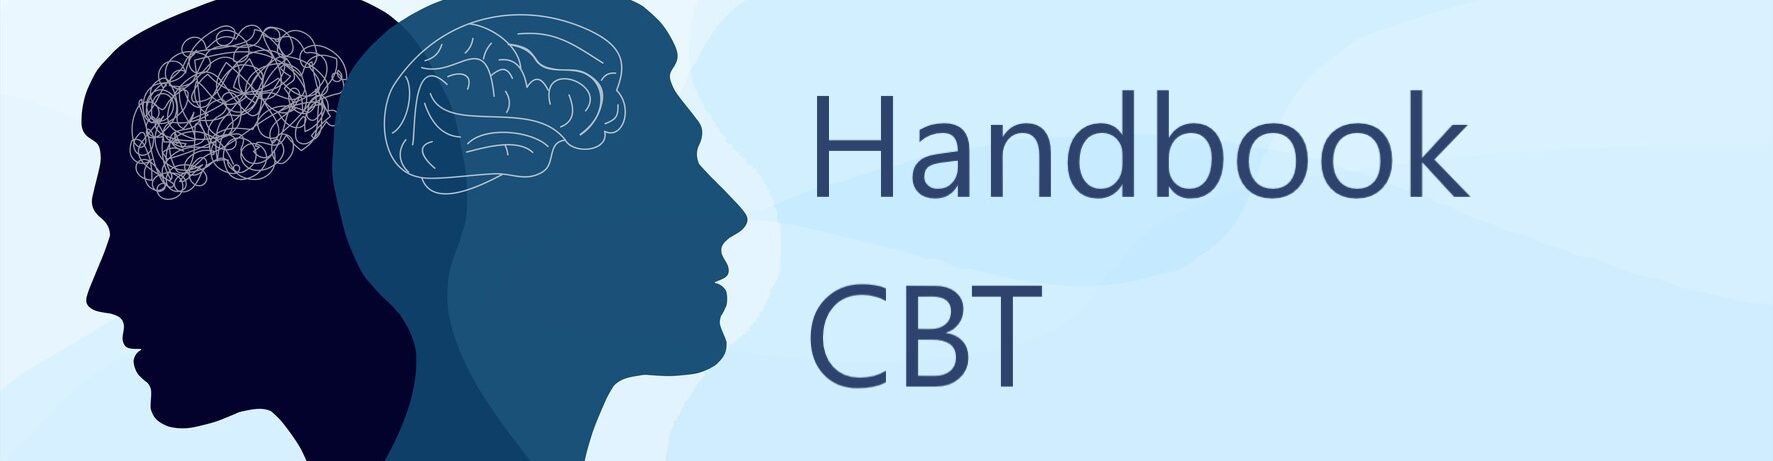 Handbook CBT